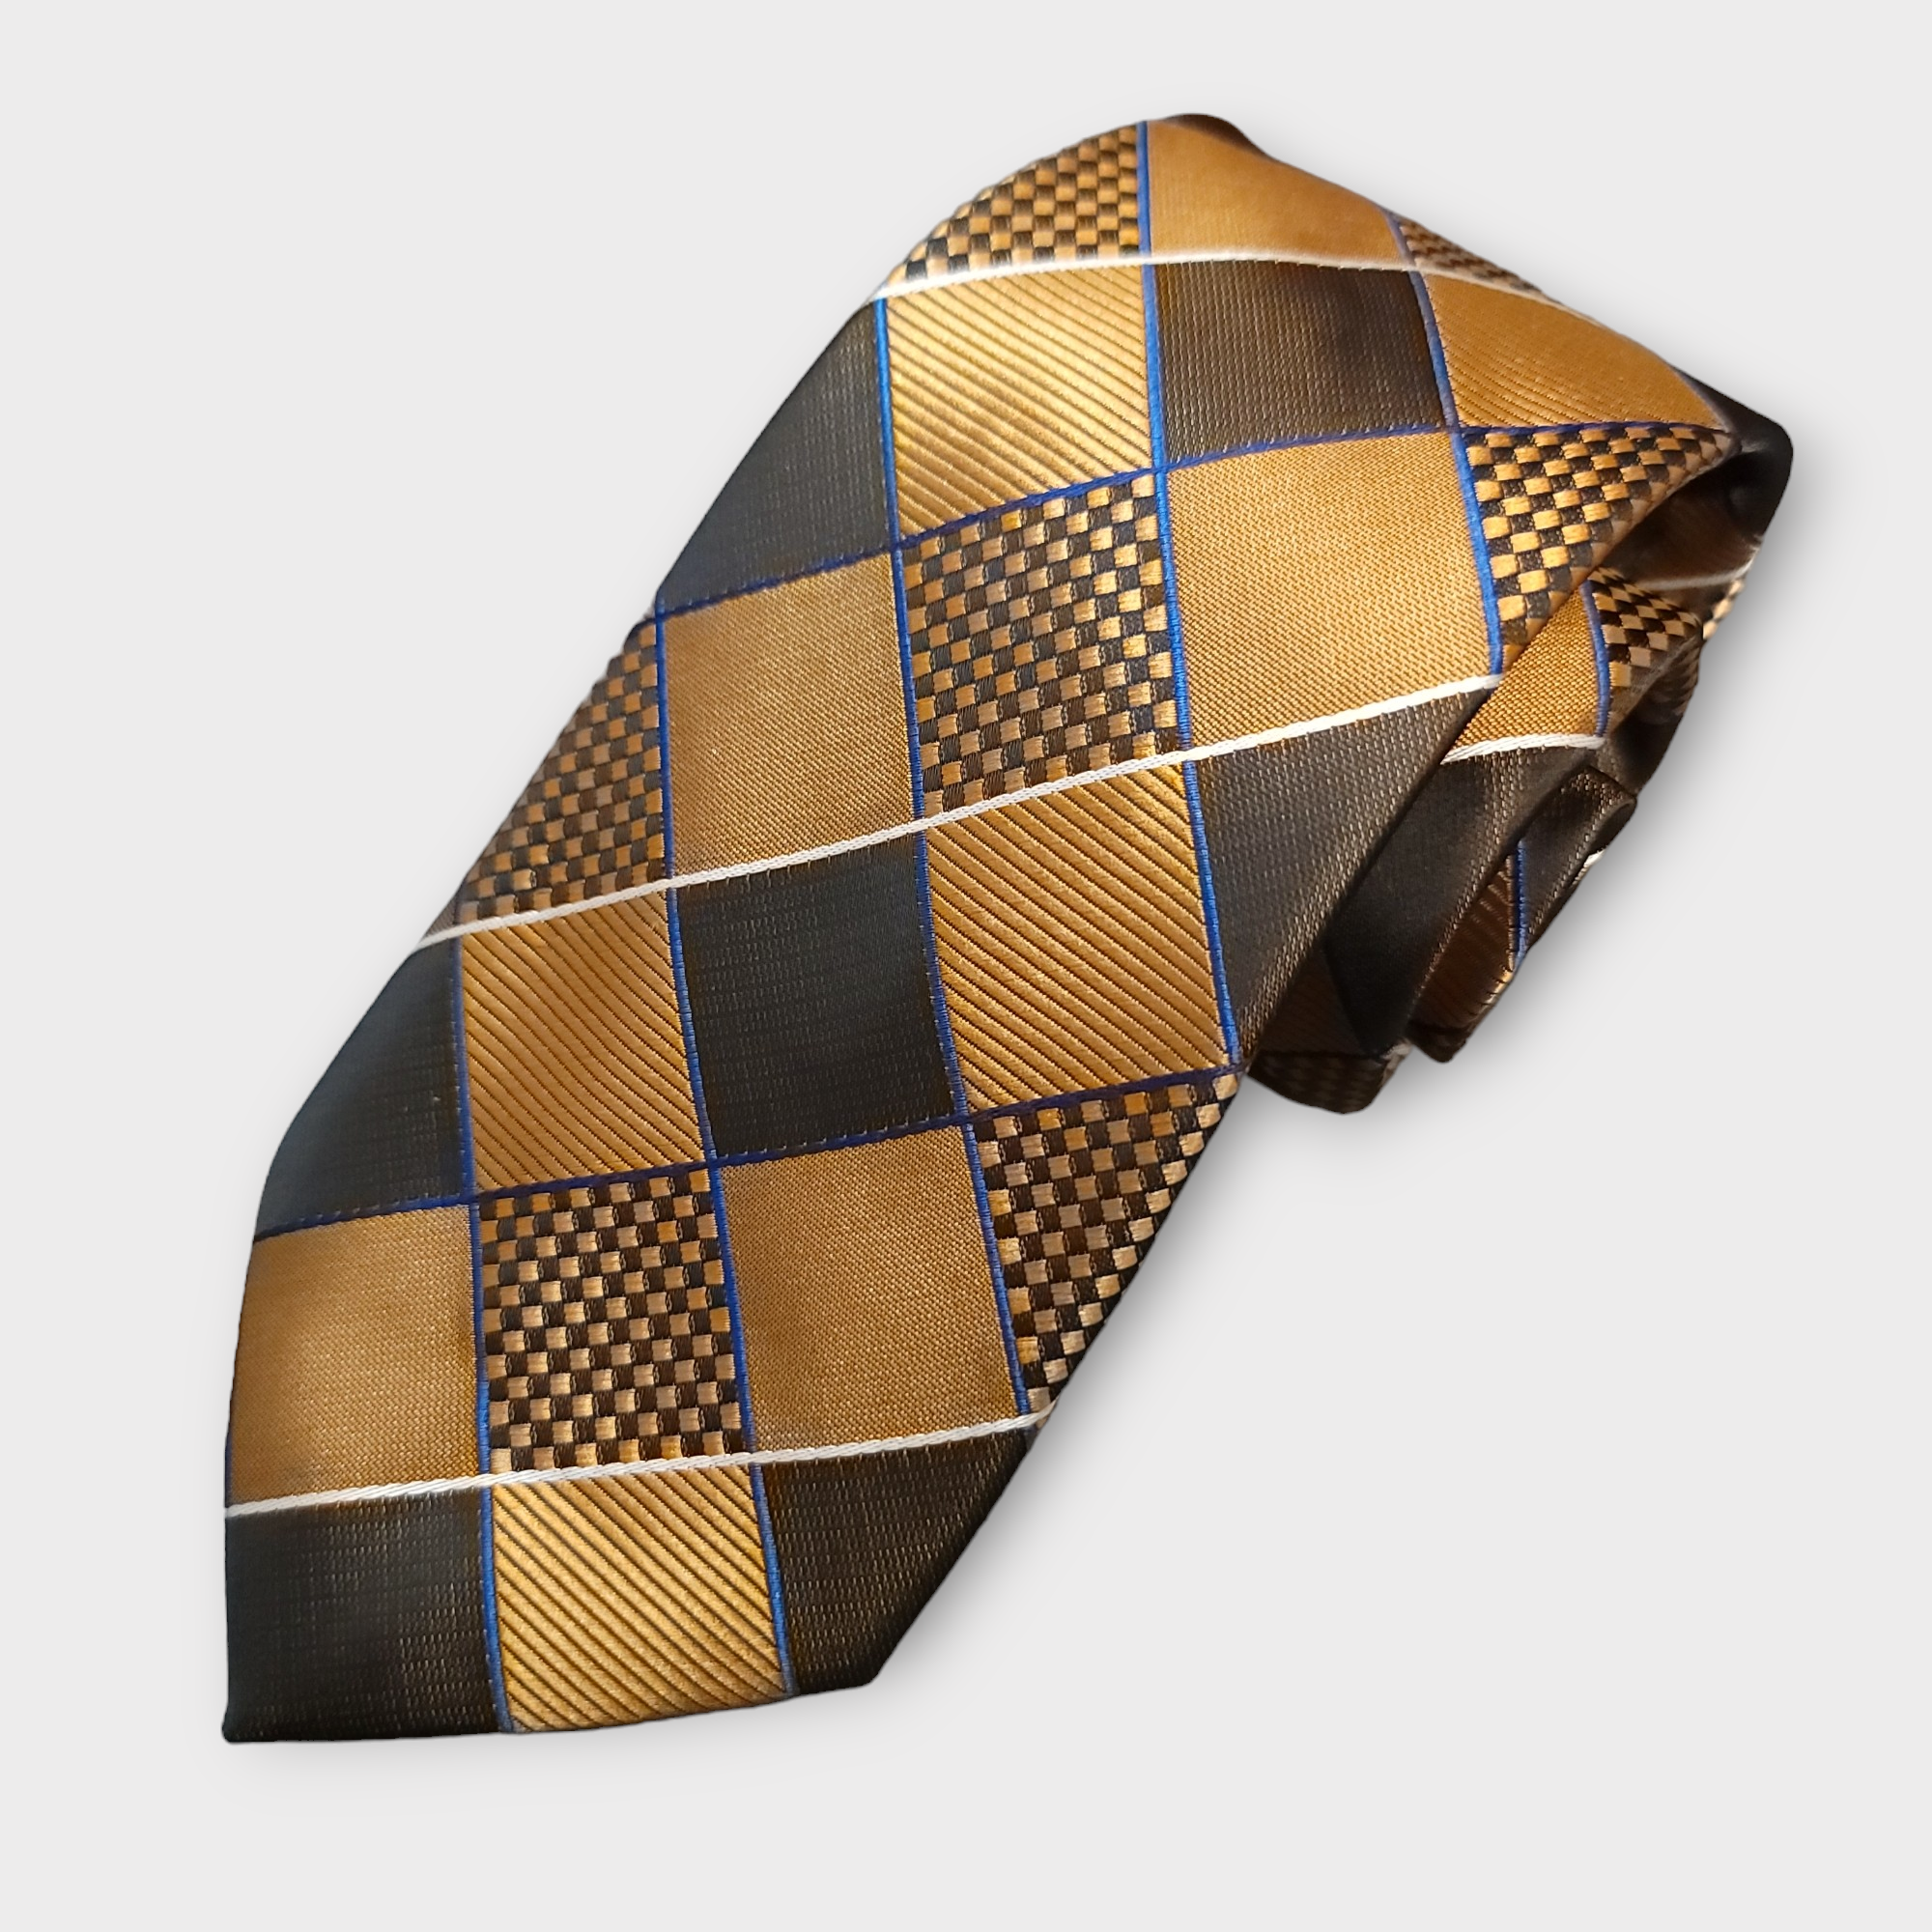 Black Brown Gold Plaid Silk Tie Pocket Square Cufflink Set